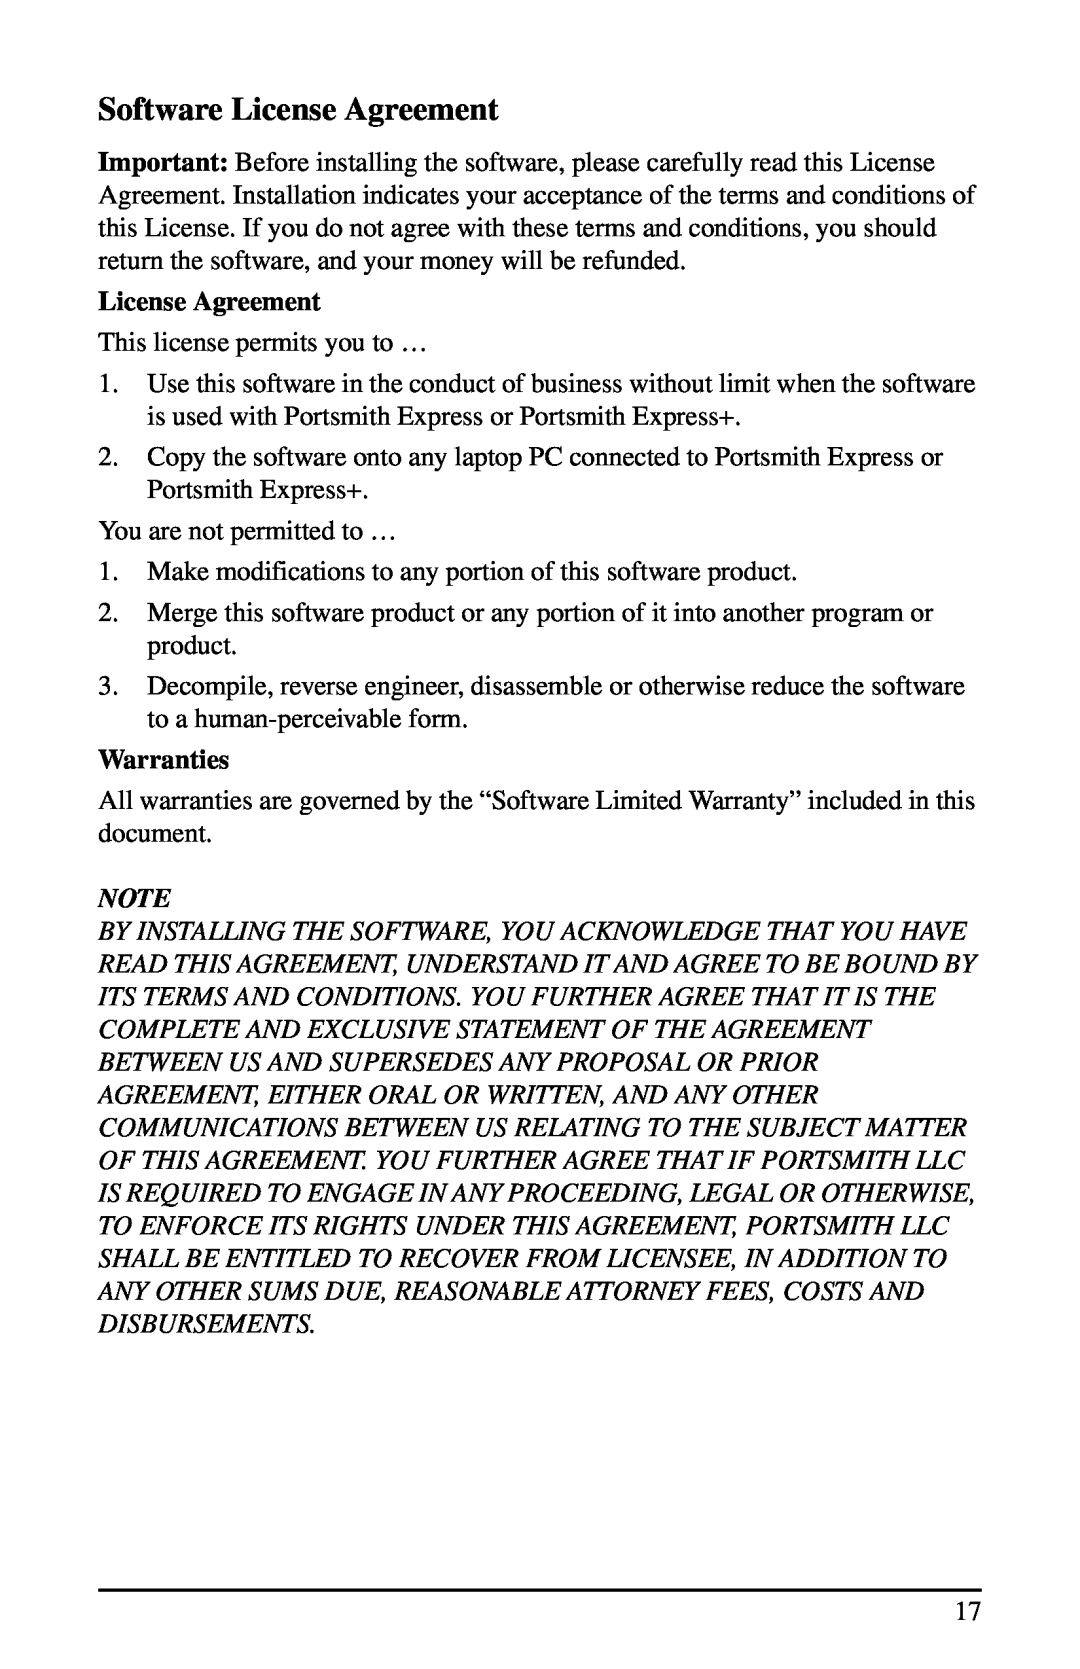 Portsmith USB user manual Software License Agreement, Warranties 